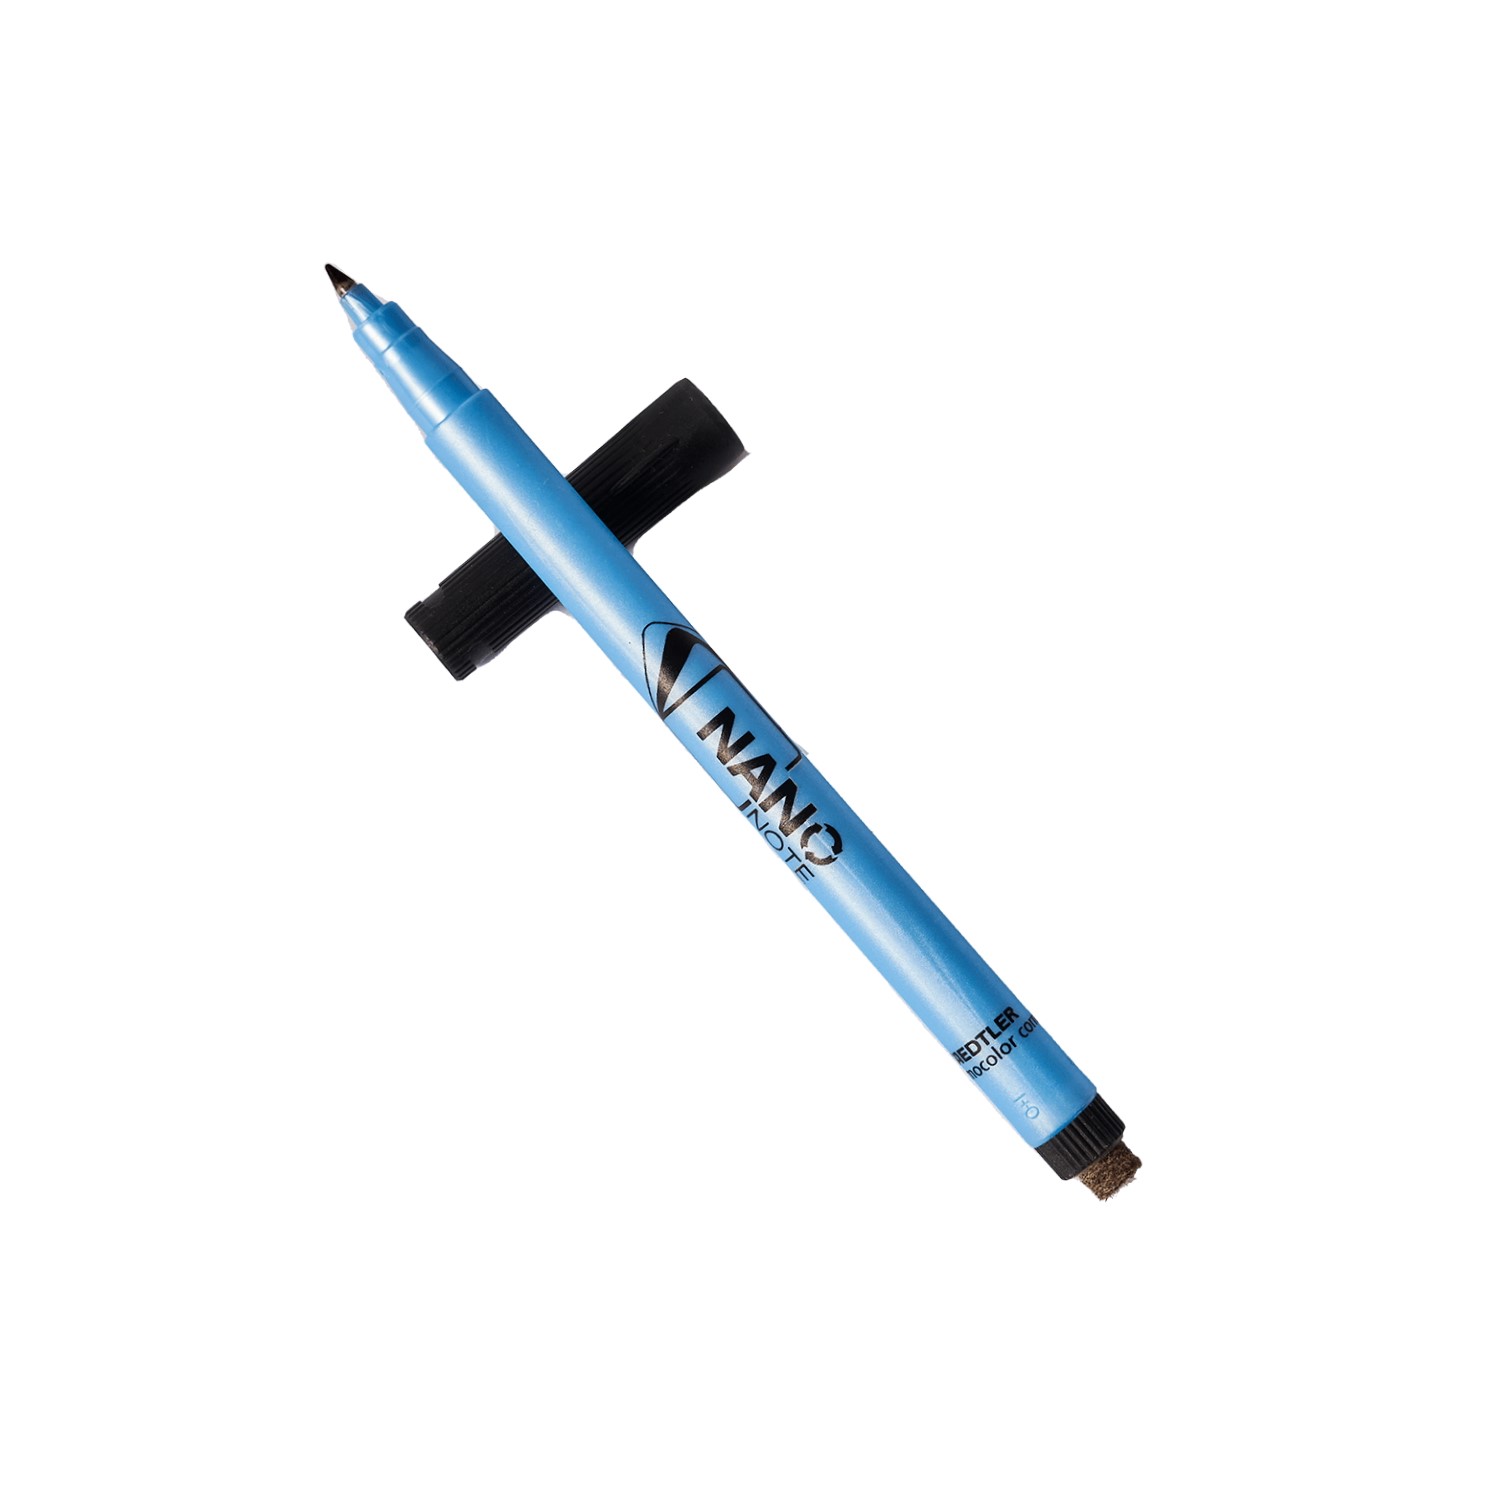 G T Luscombe 161310 Pen-Pigma Micron 005 Ultra Fine Point Note Pen - Set of  4 